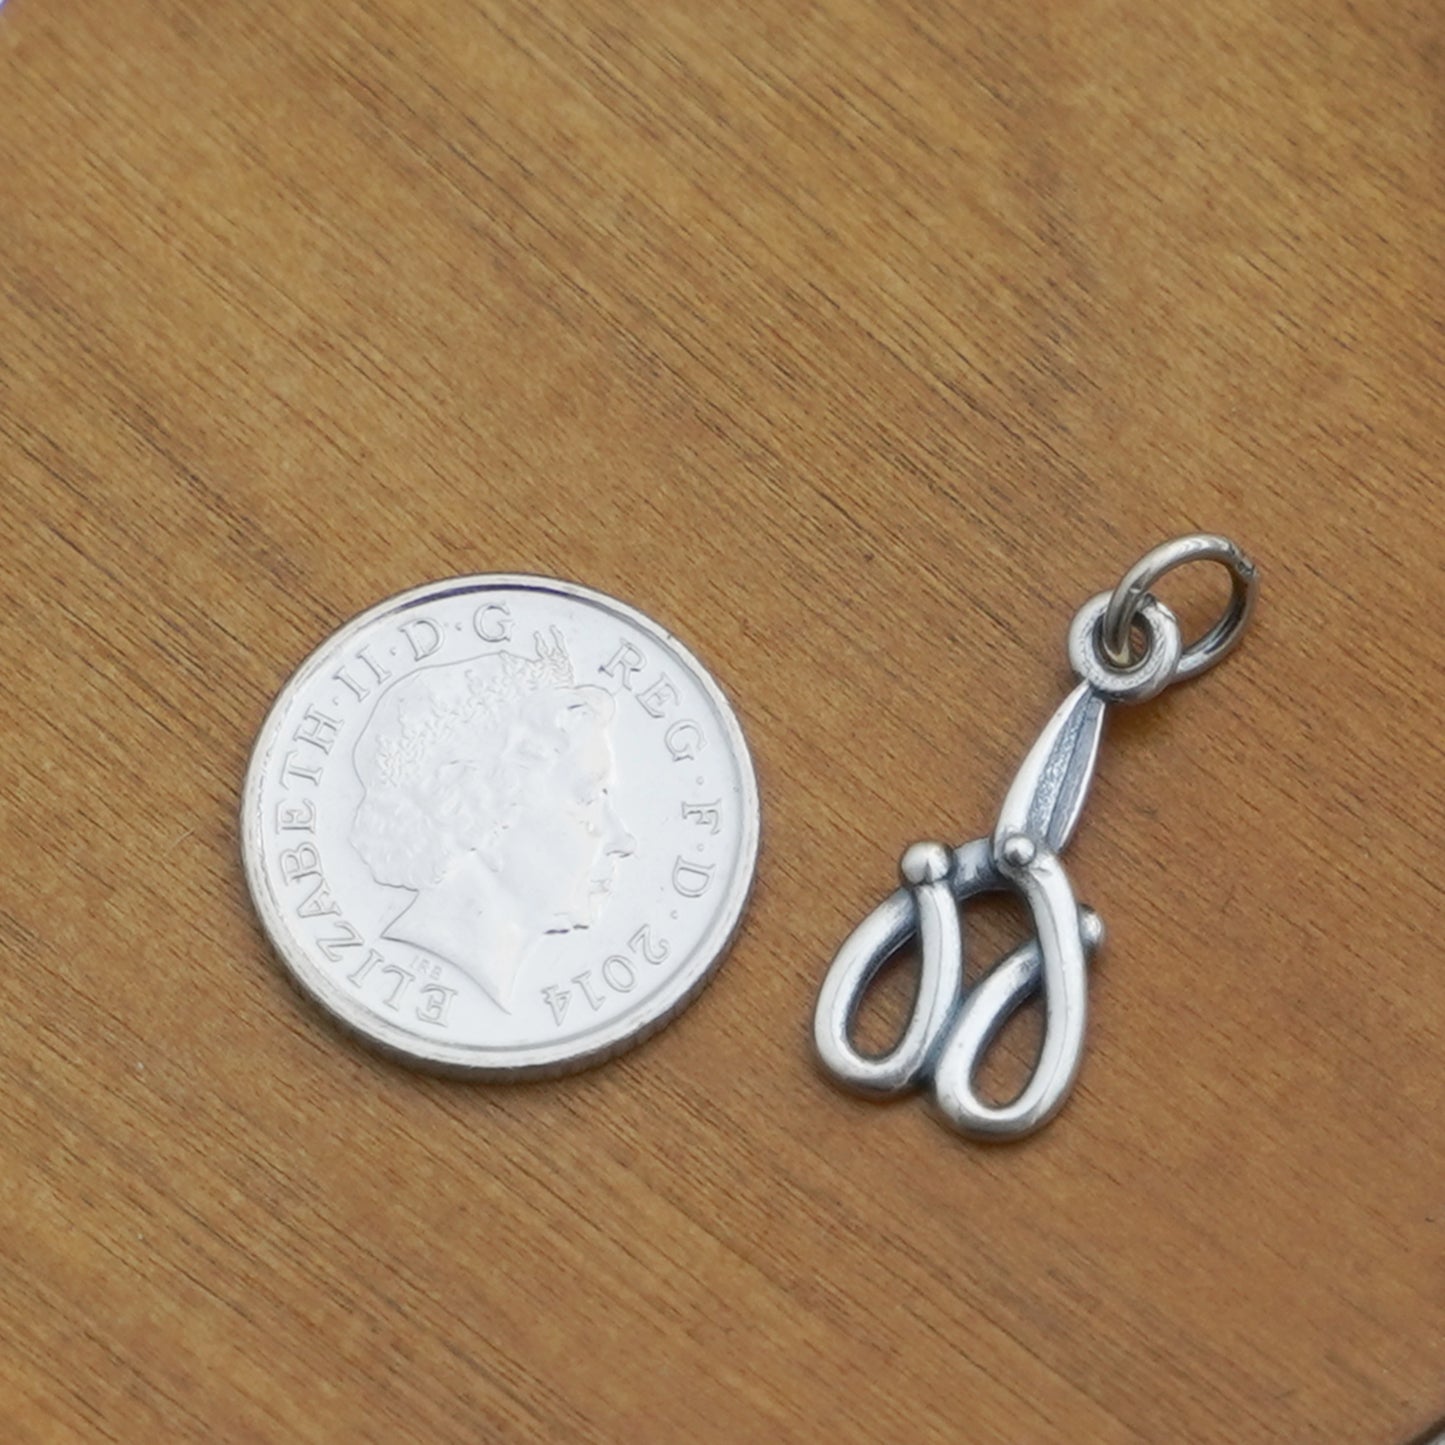 Sterling Silver Oxidized Scissors Charm Pendant Cute Craft Gift II - sugarkittenlondon